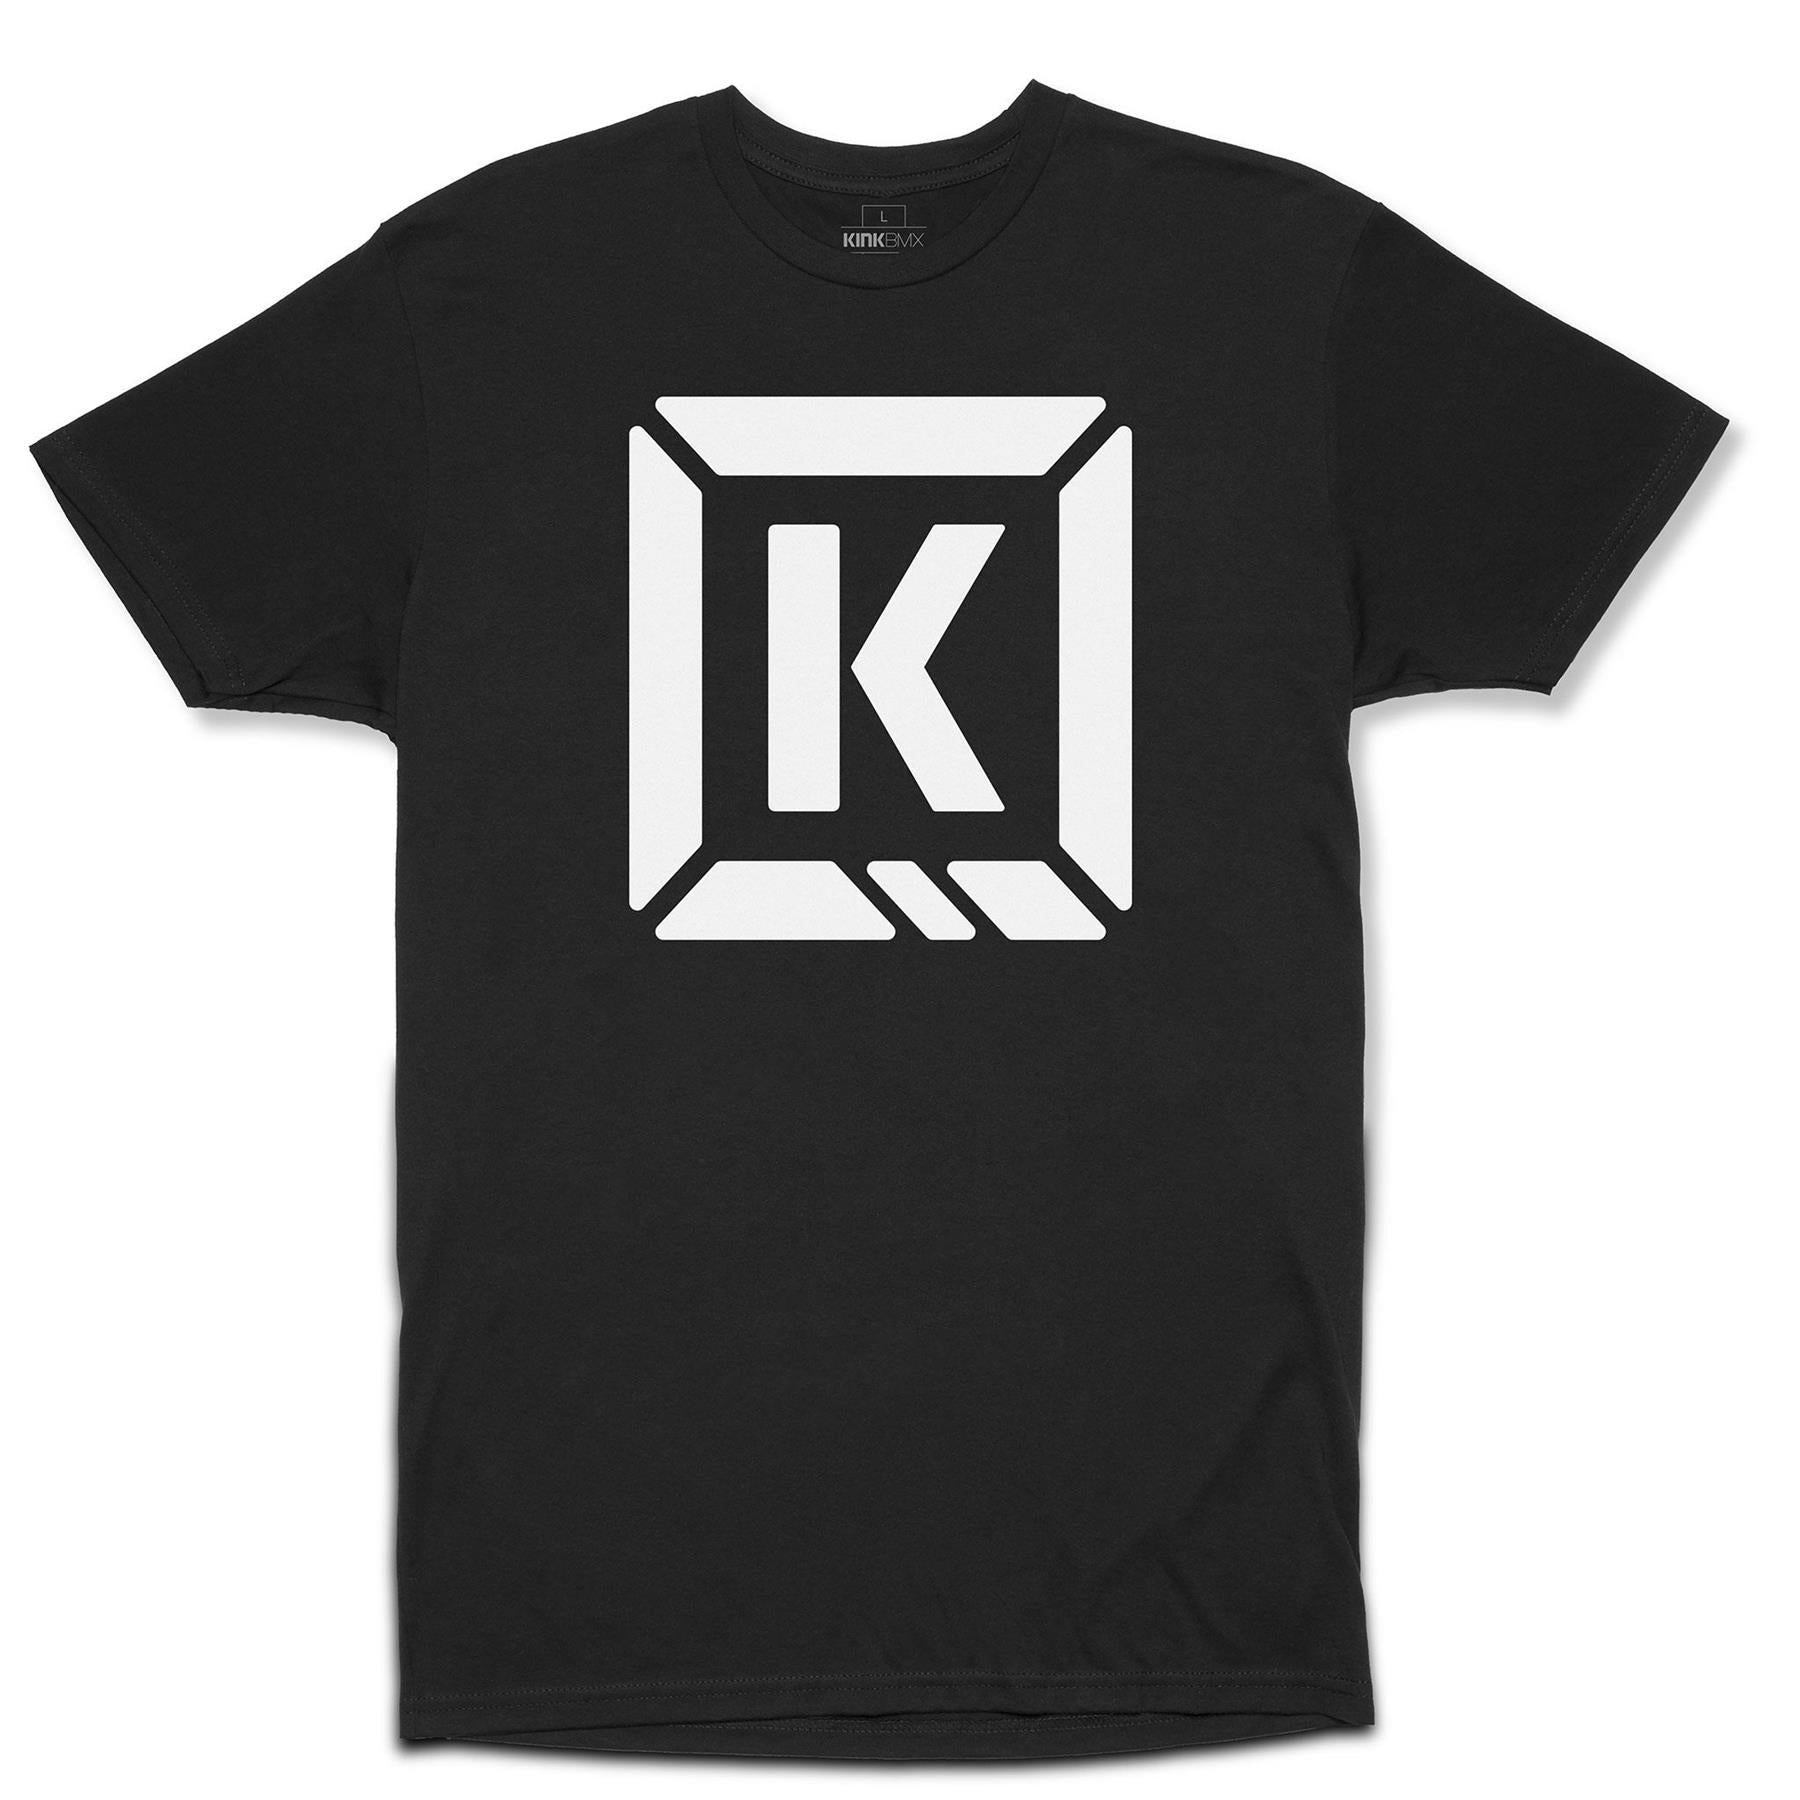 Kink Represent Camiseta - Black/White